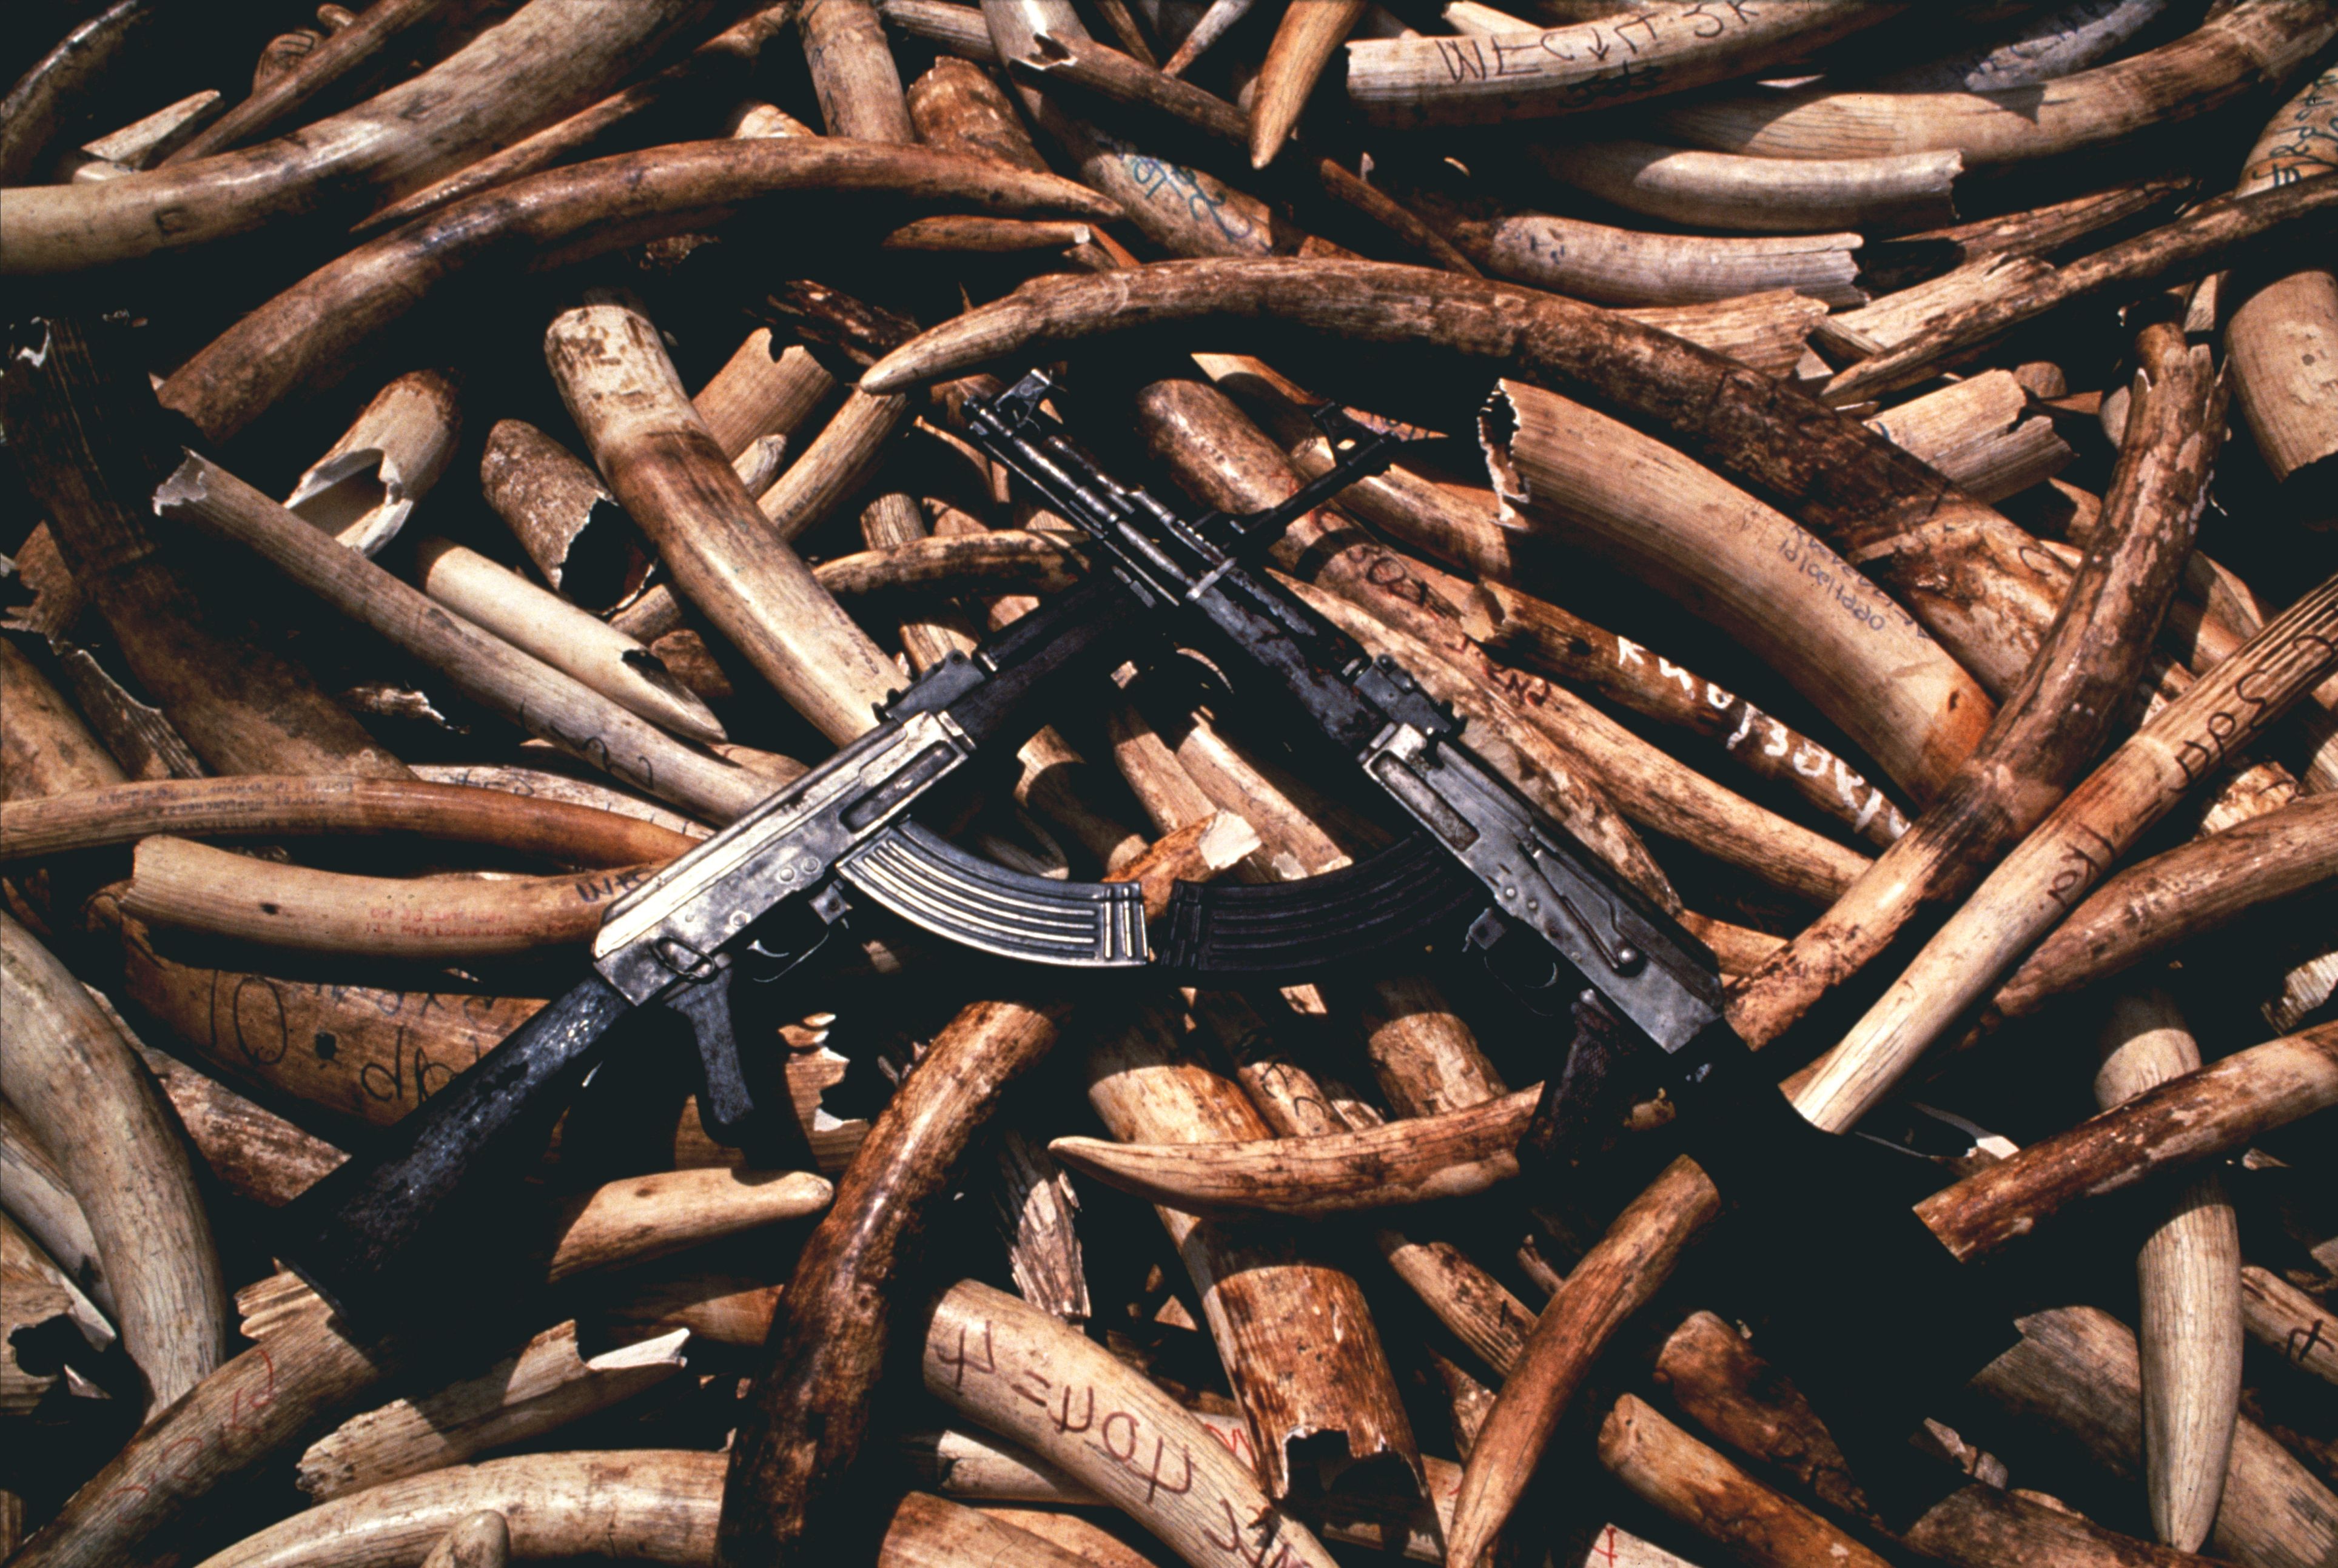 AK-47 rifle and Mikhail Kalashnikov were agriculture's giant loss